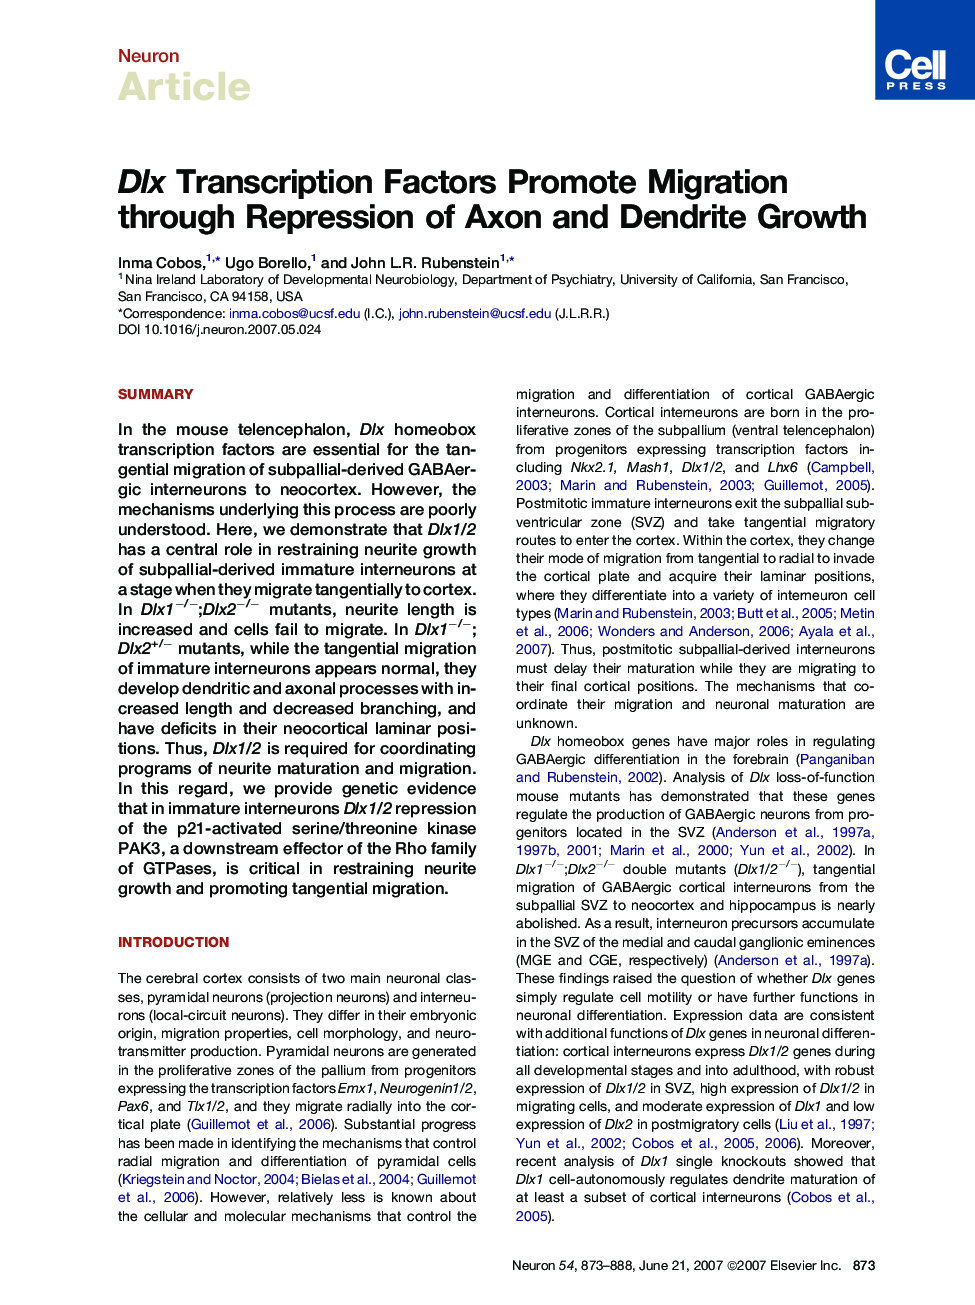 Dlx Transcription Factors Promote Migration through Repression of Axon and Dendrite Growth